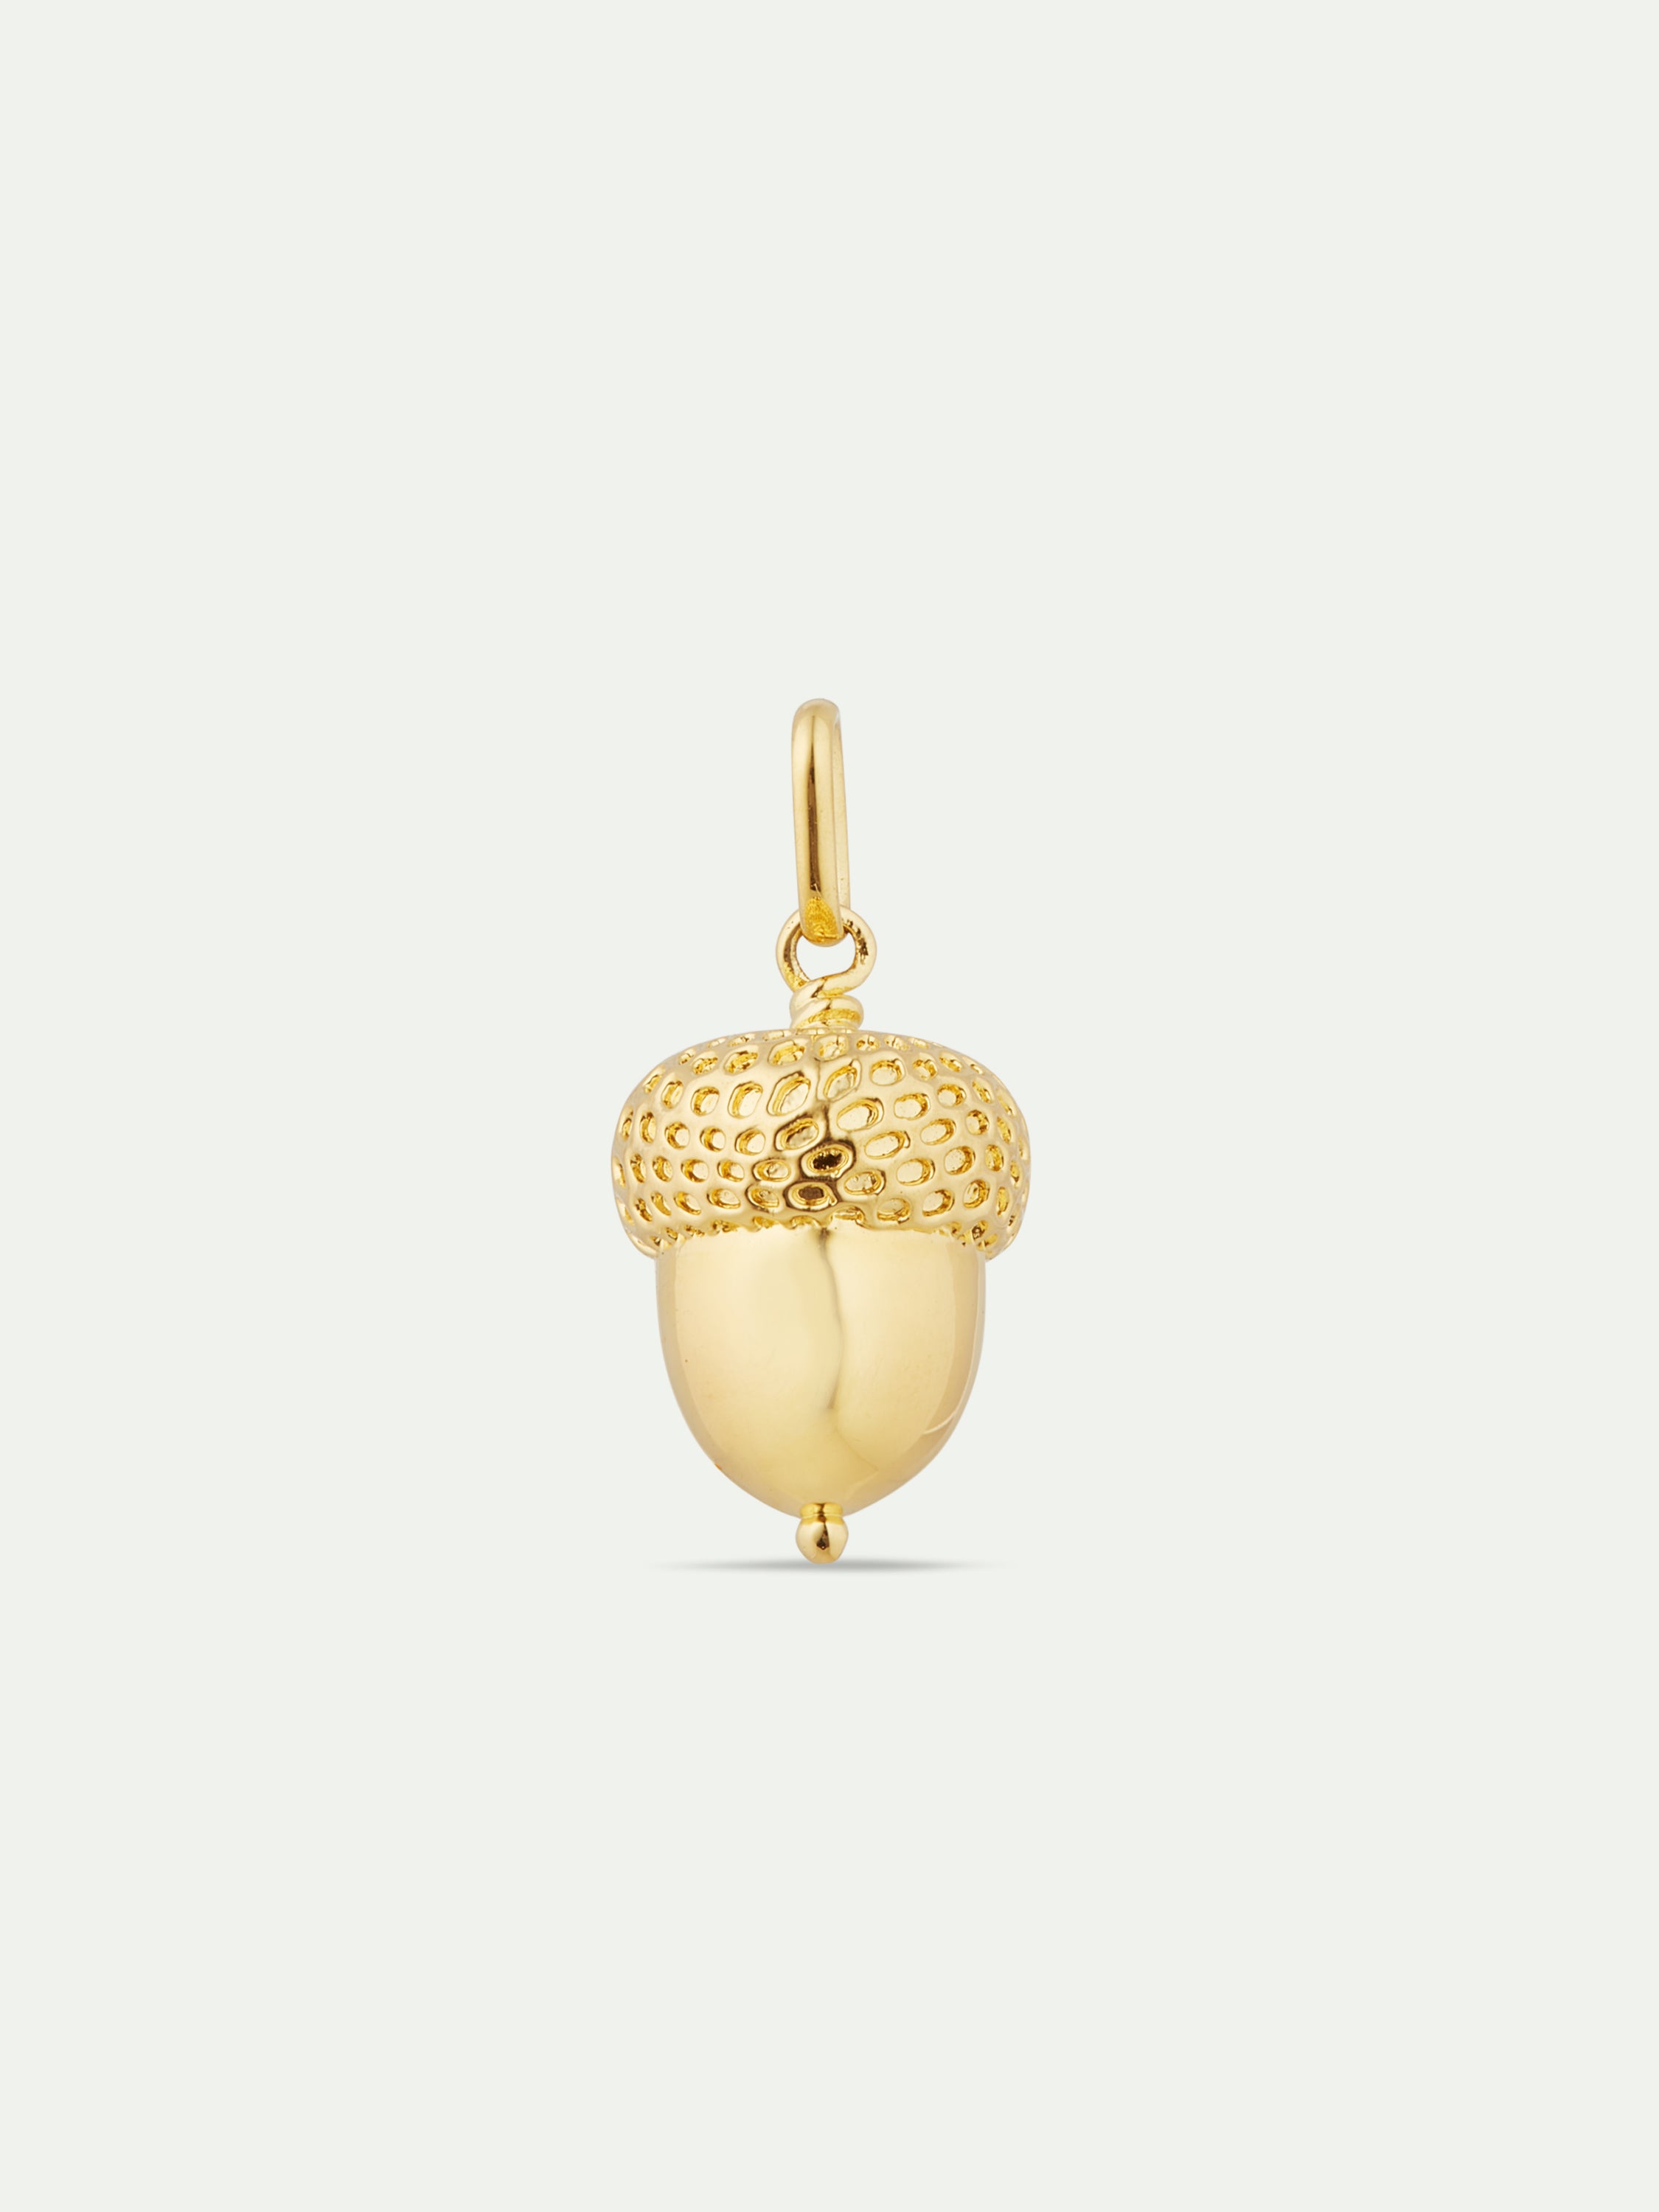 Golden hazelnut pendant